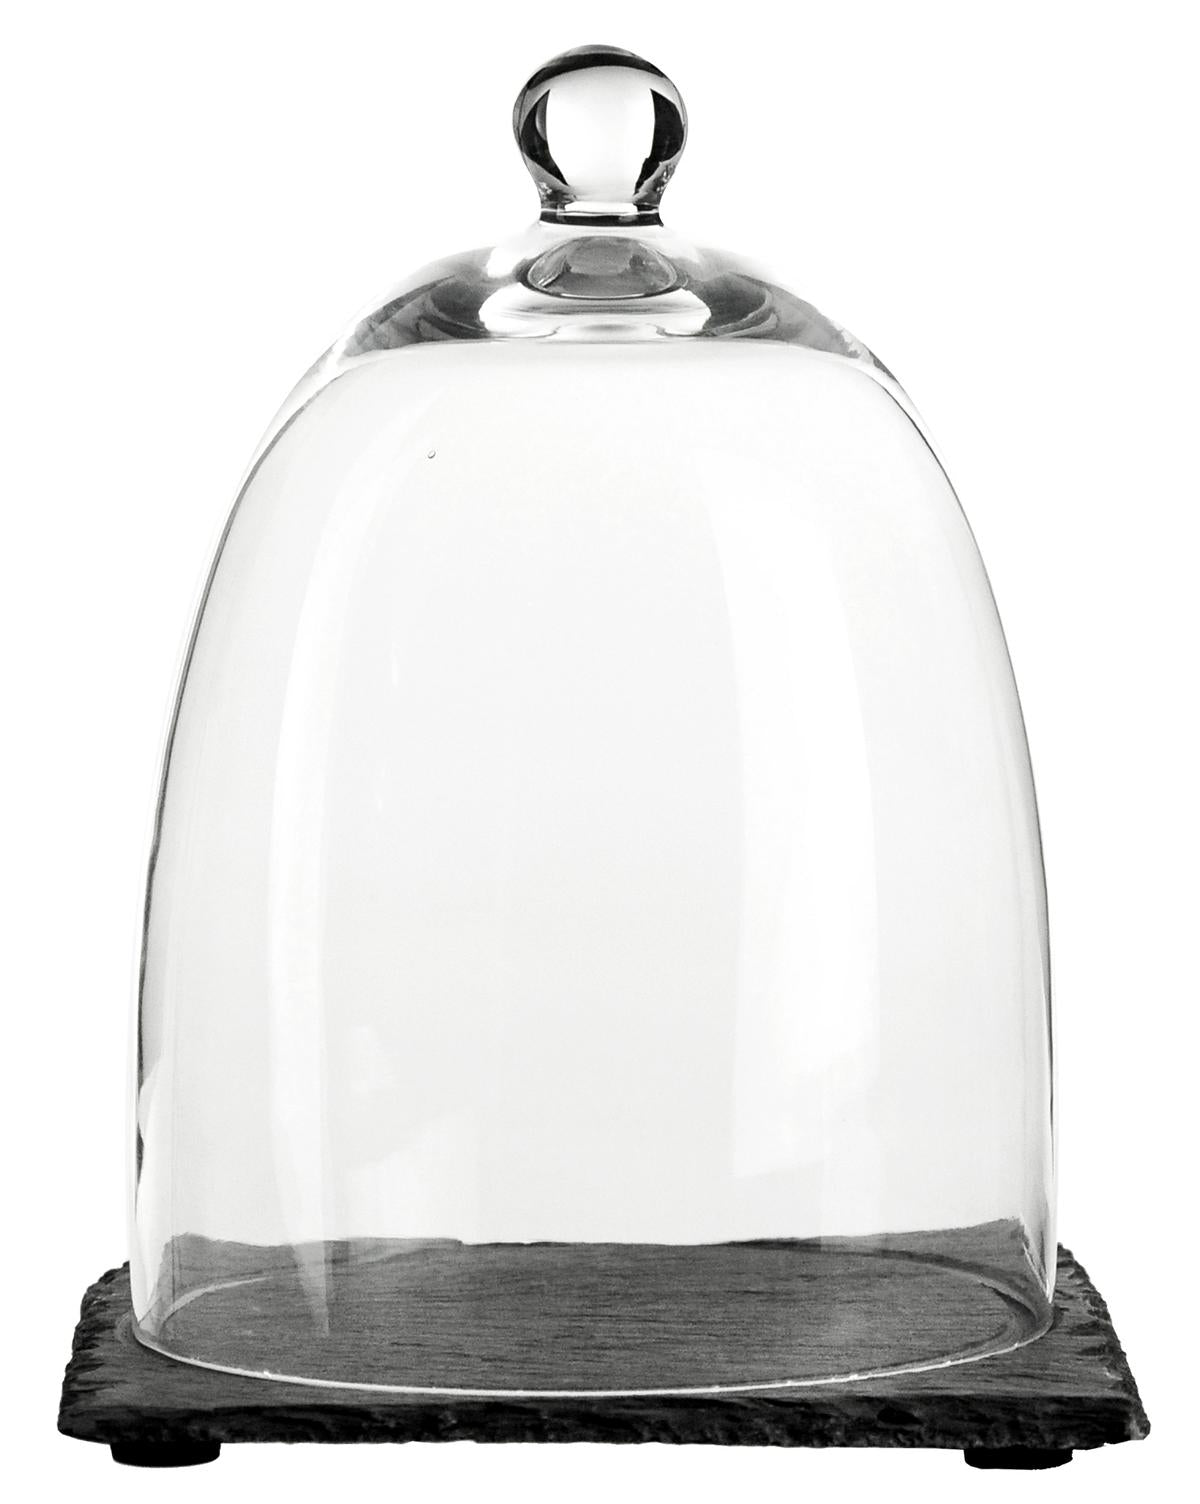 Glasglocke auf Schieferplatte 15x20cm Glashaube Glaskuppel Glocke Glasdom Haube